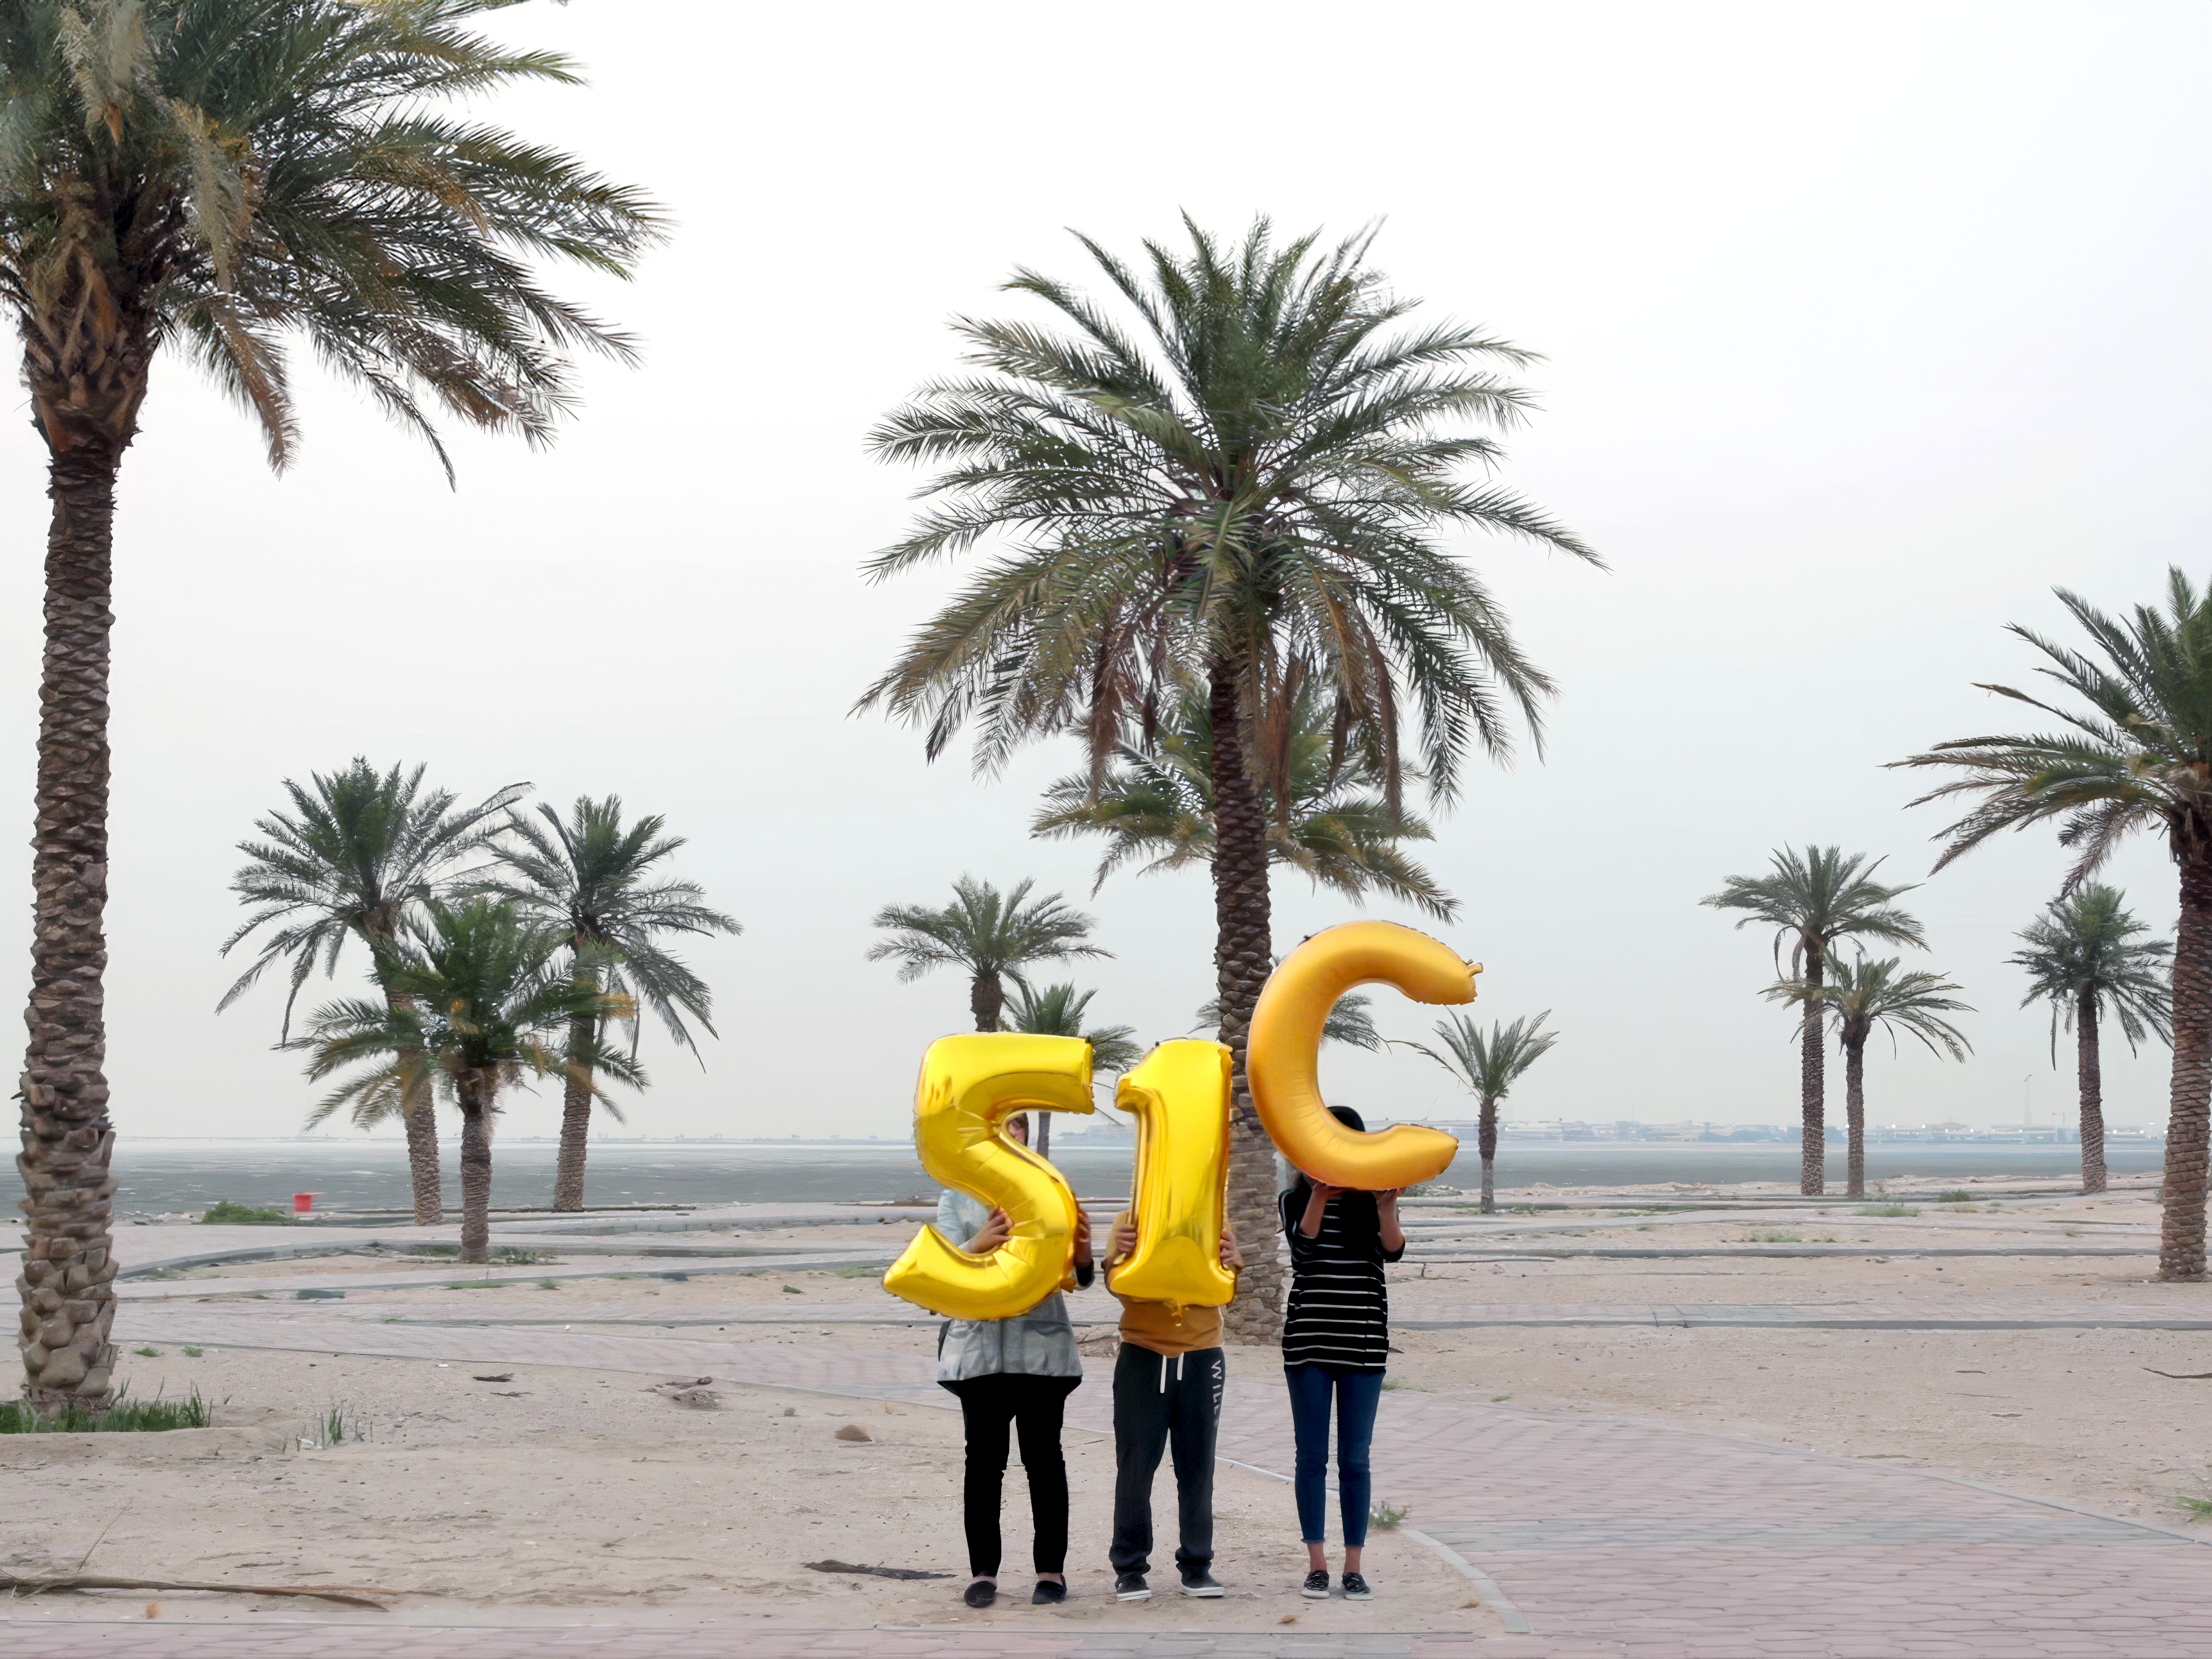 Kuwait, Kuwait City, Shuwaikh Beach (شاطئ الشويخ) - 51c, Silence was Golden, gold balloons